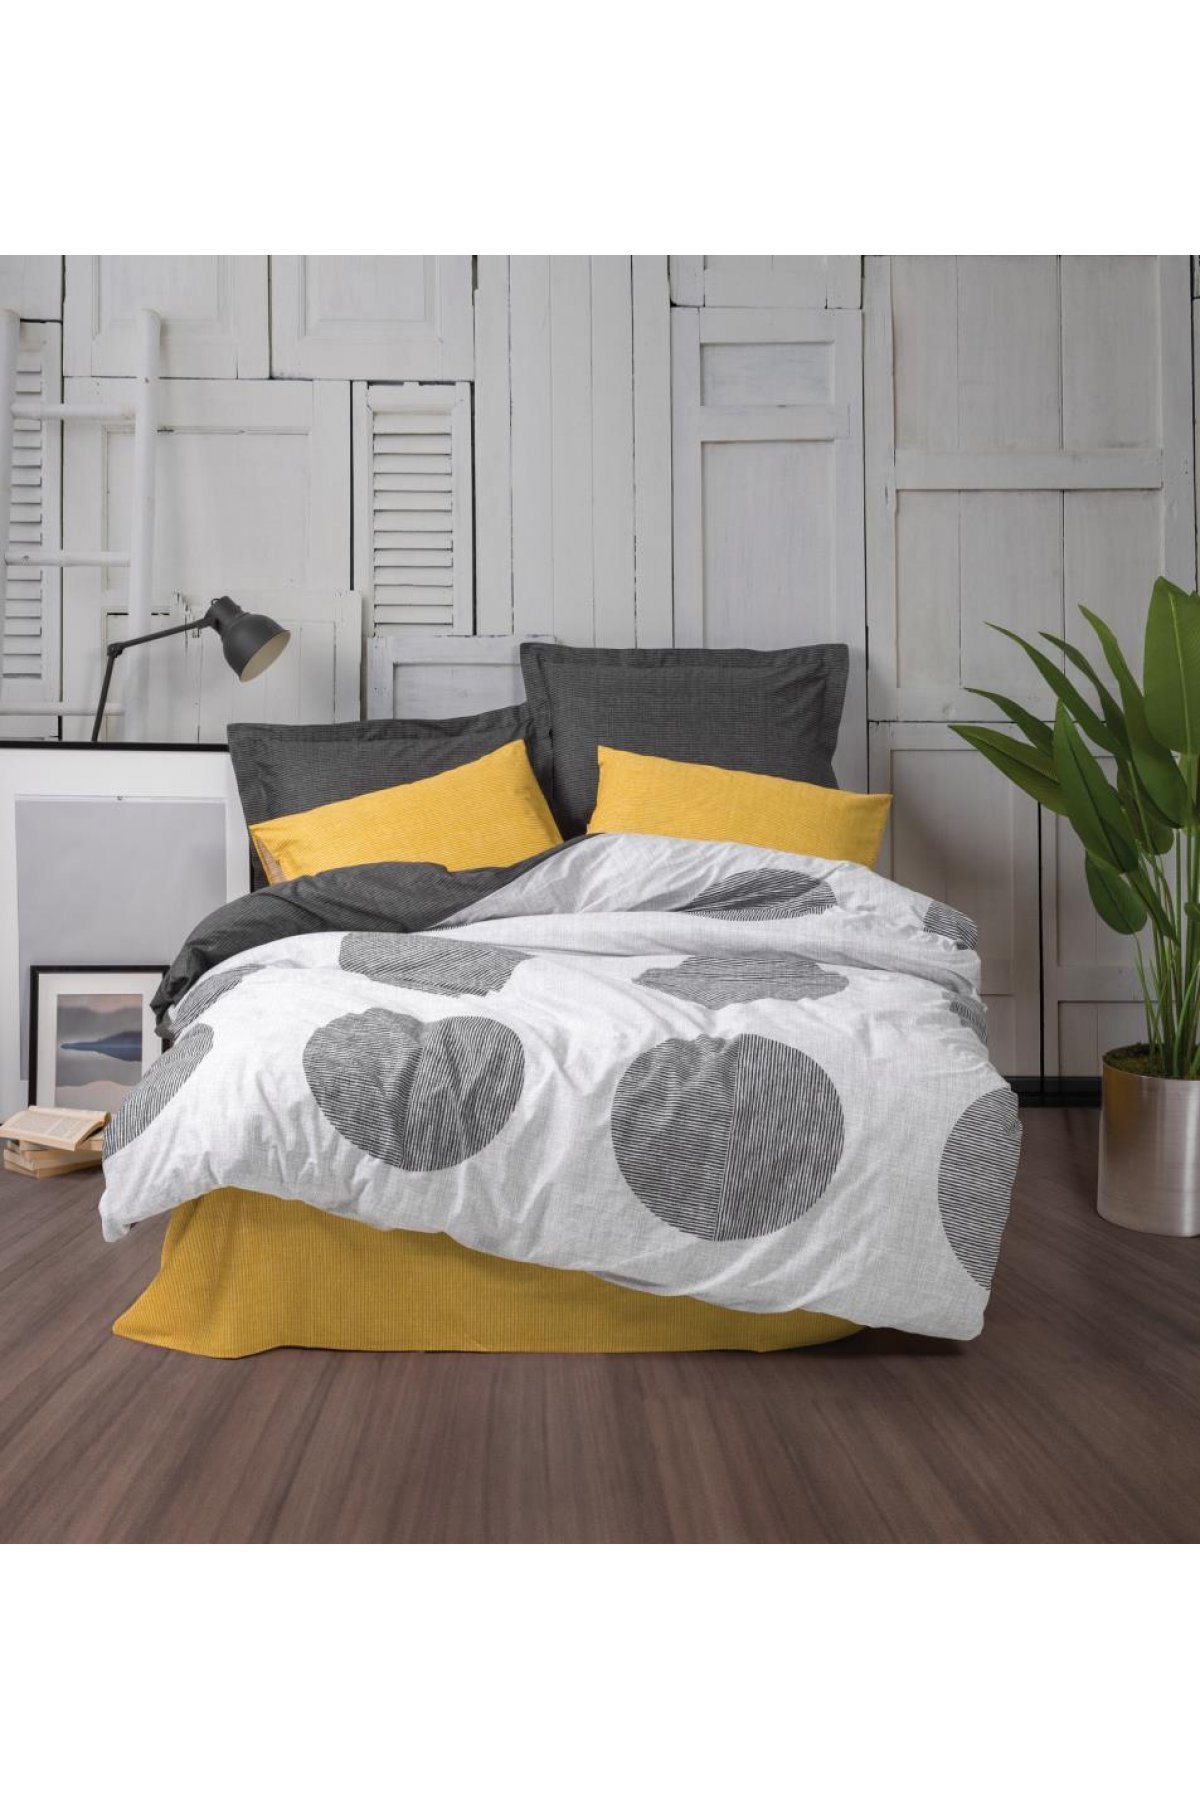 Bedding-Yellow